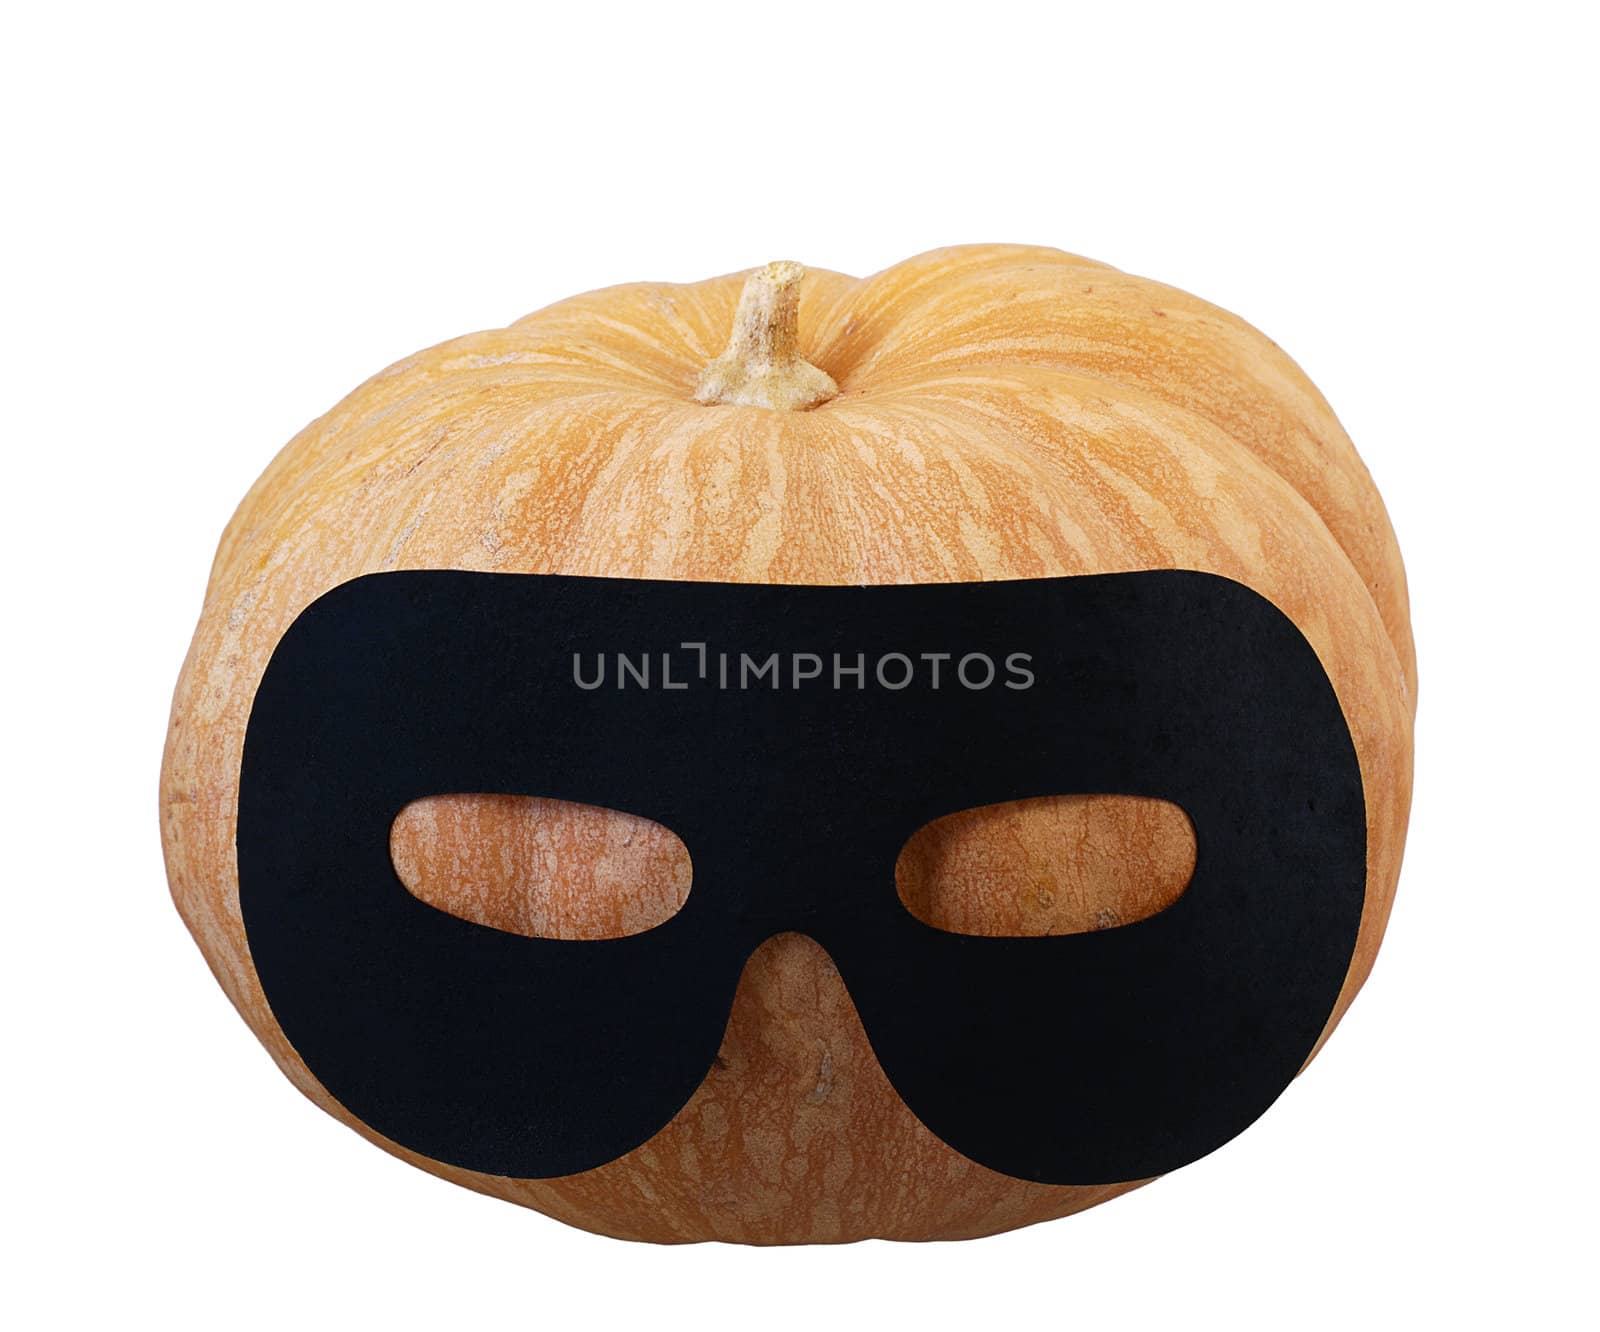 Small orange pumpkin in masquerade mask by vadidak